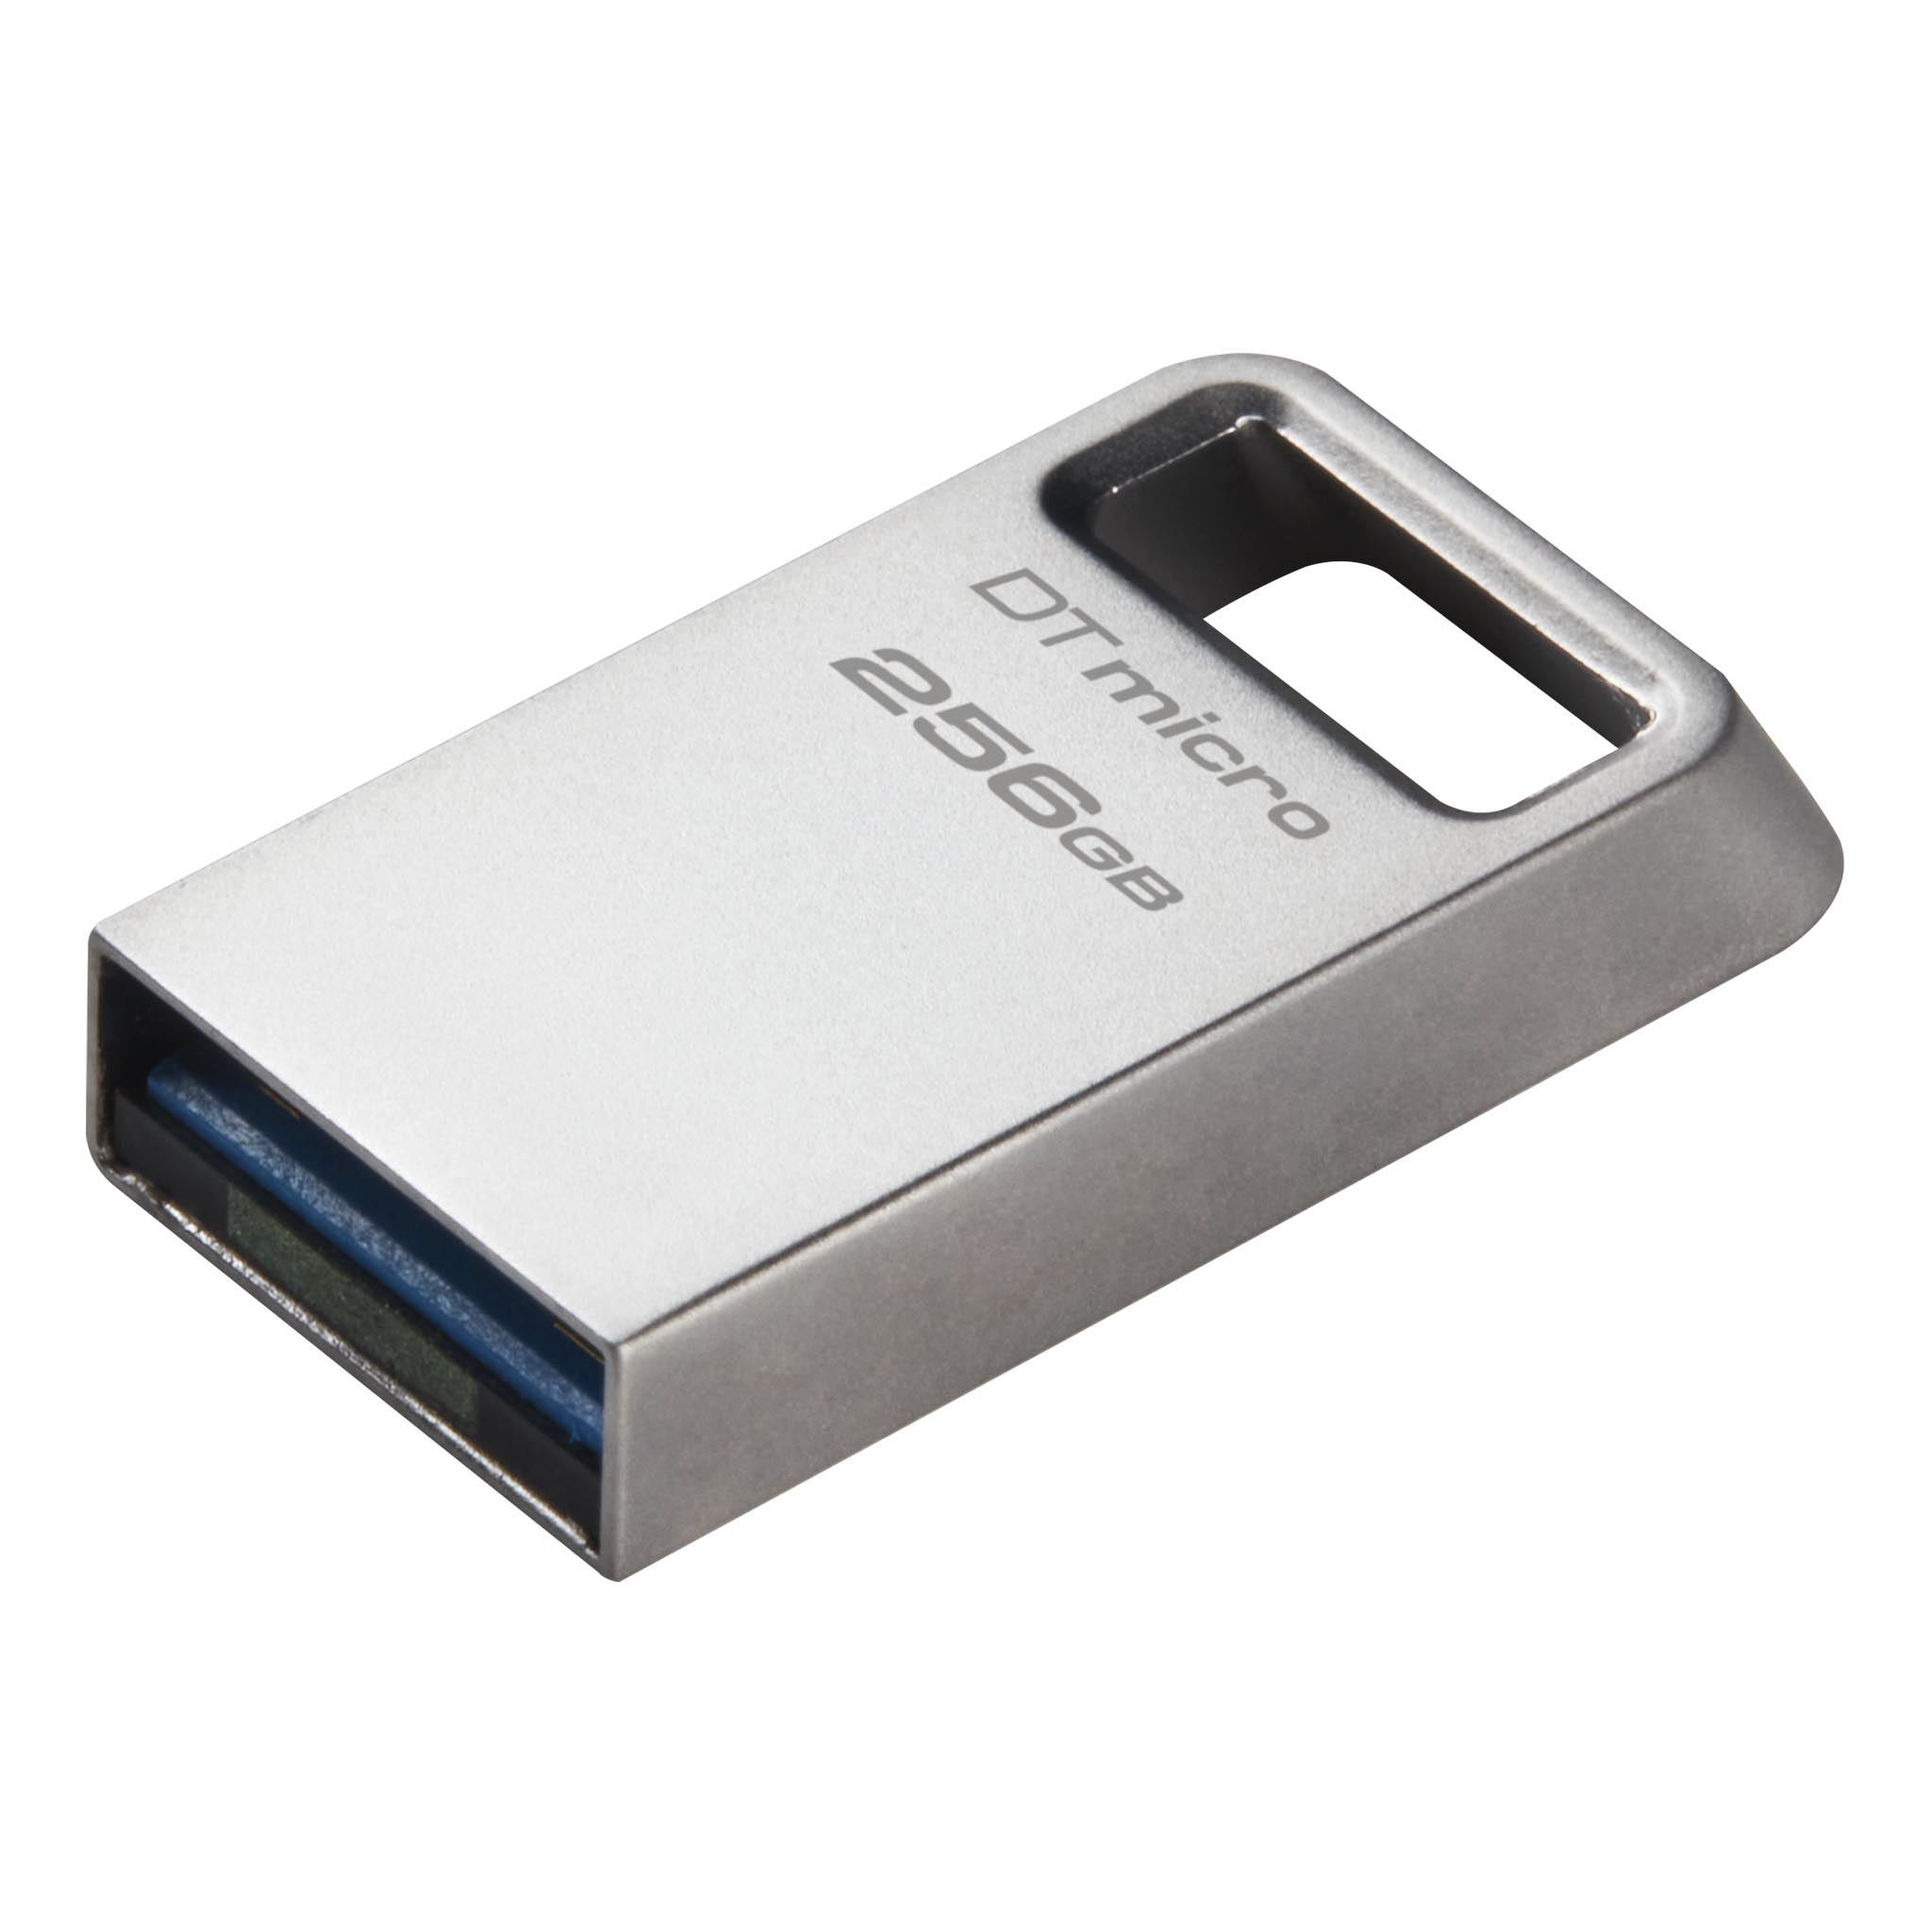 GB) Micro (silber, USB-Flash-Laufwerk 256 KINGSTON DataTraveler